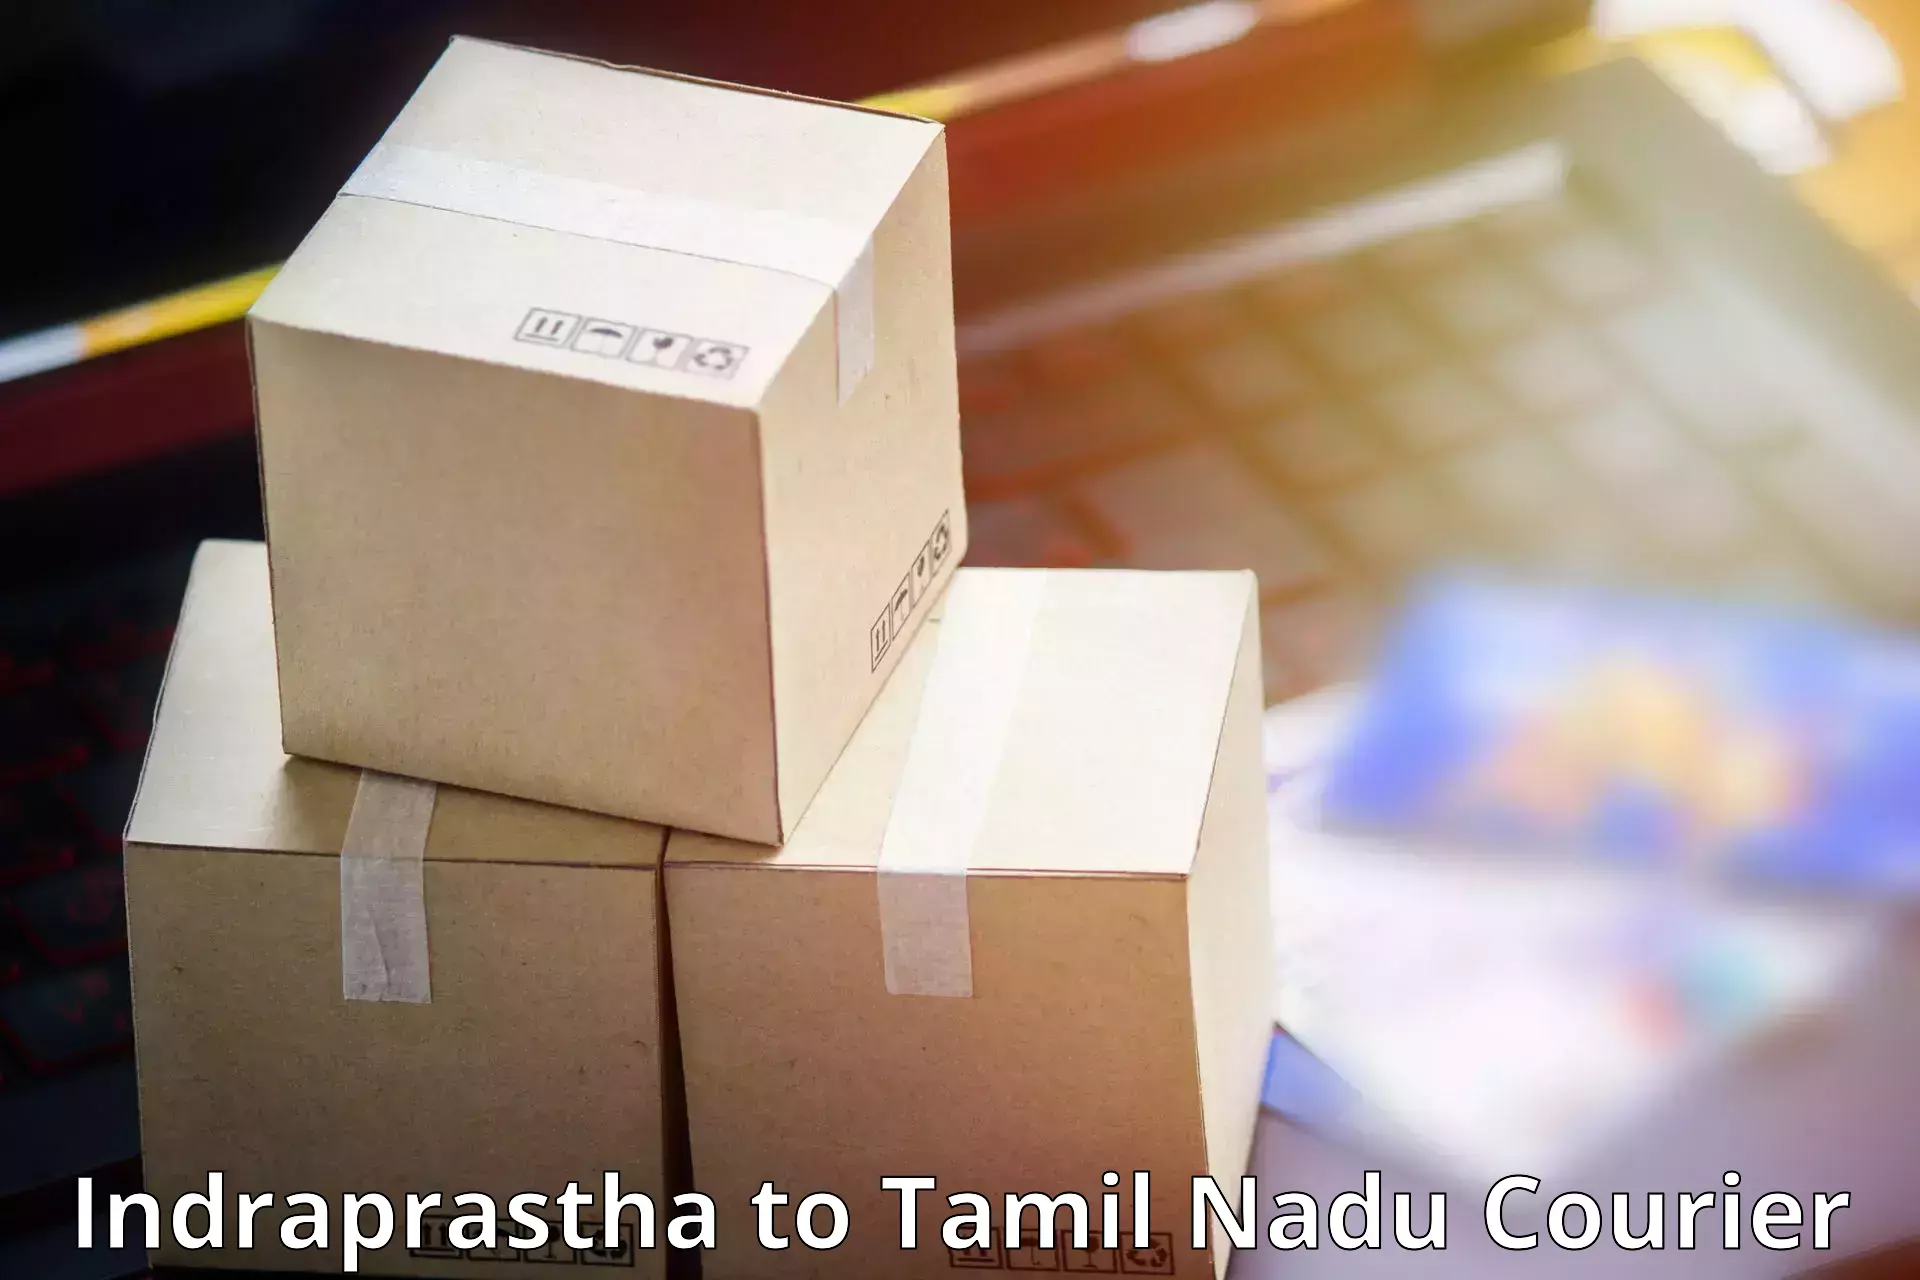 Courier service comparison Indraprastha to Tiruturaipundi